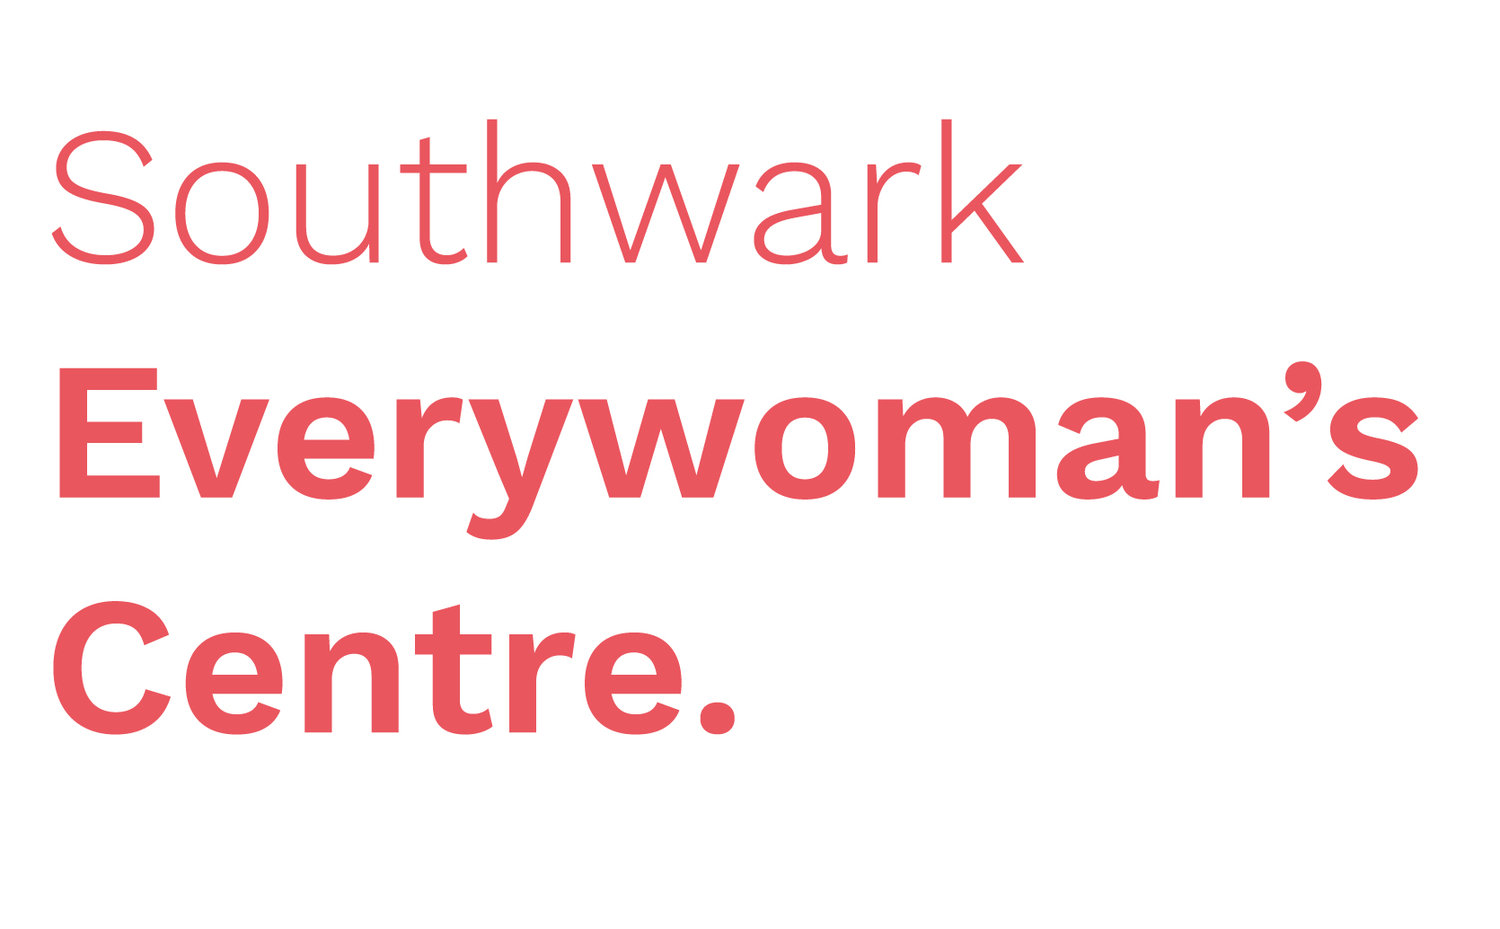 southwark everywoman's centre